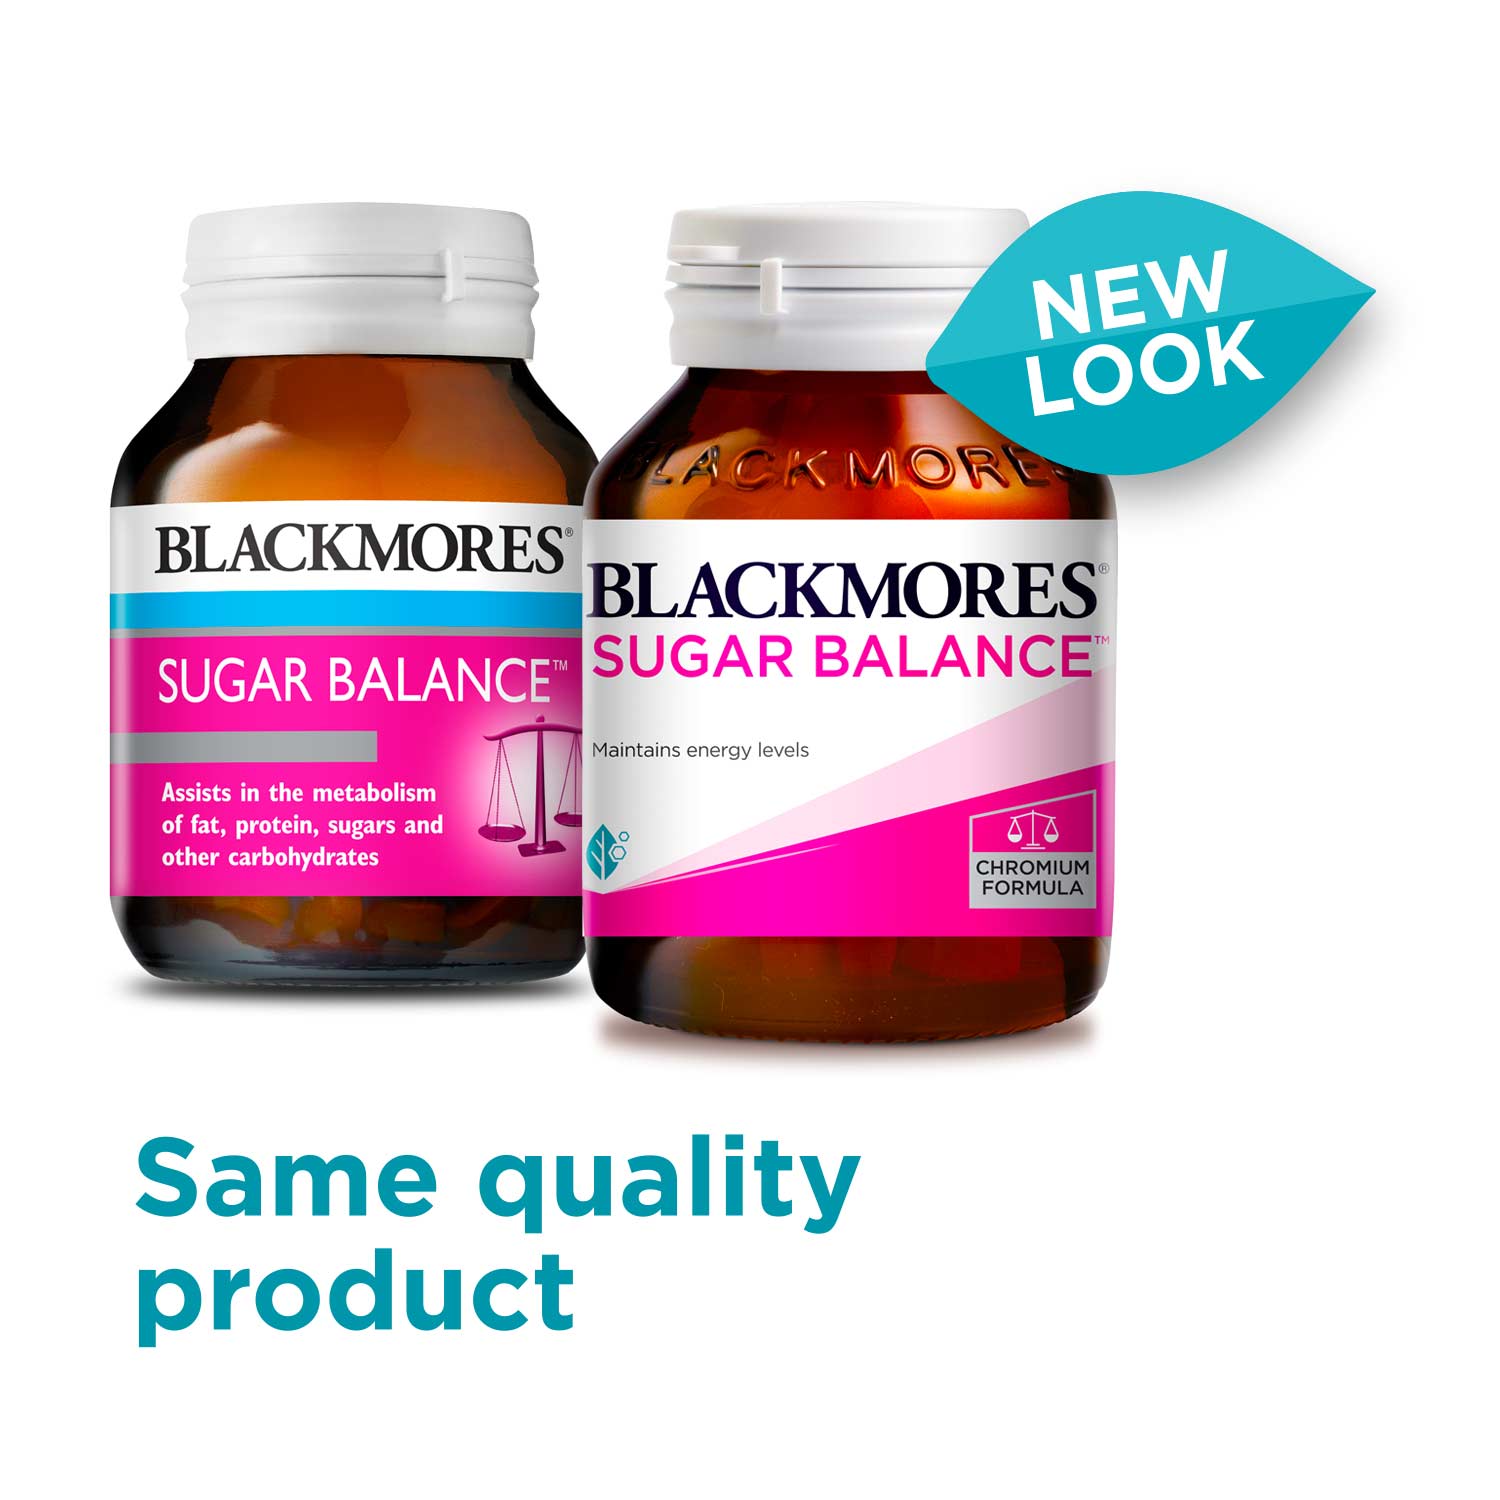 Blackmores Sugar Balance new look label